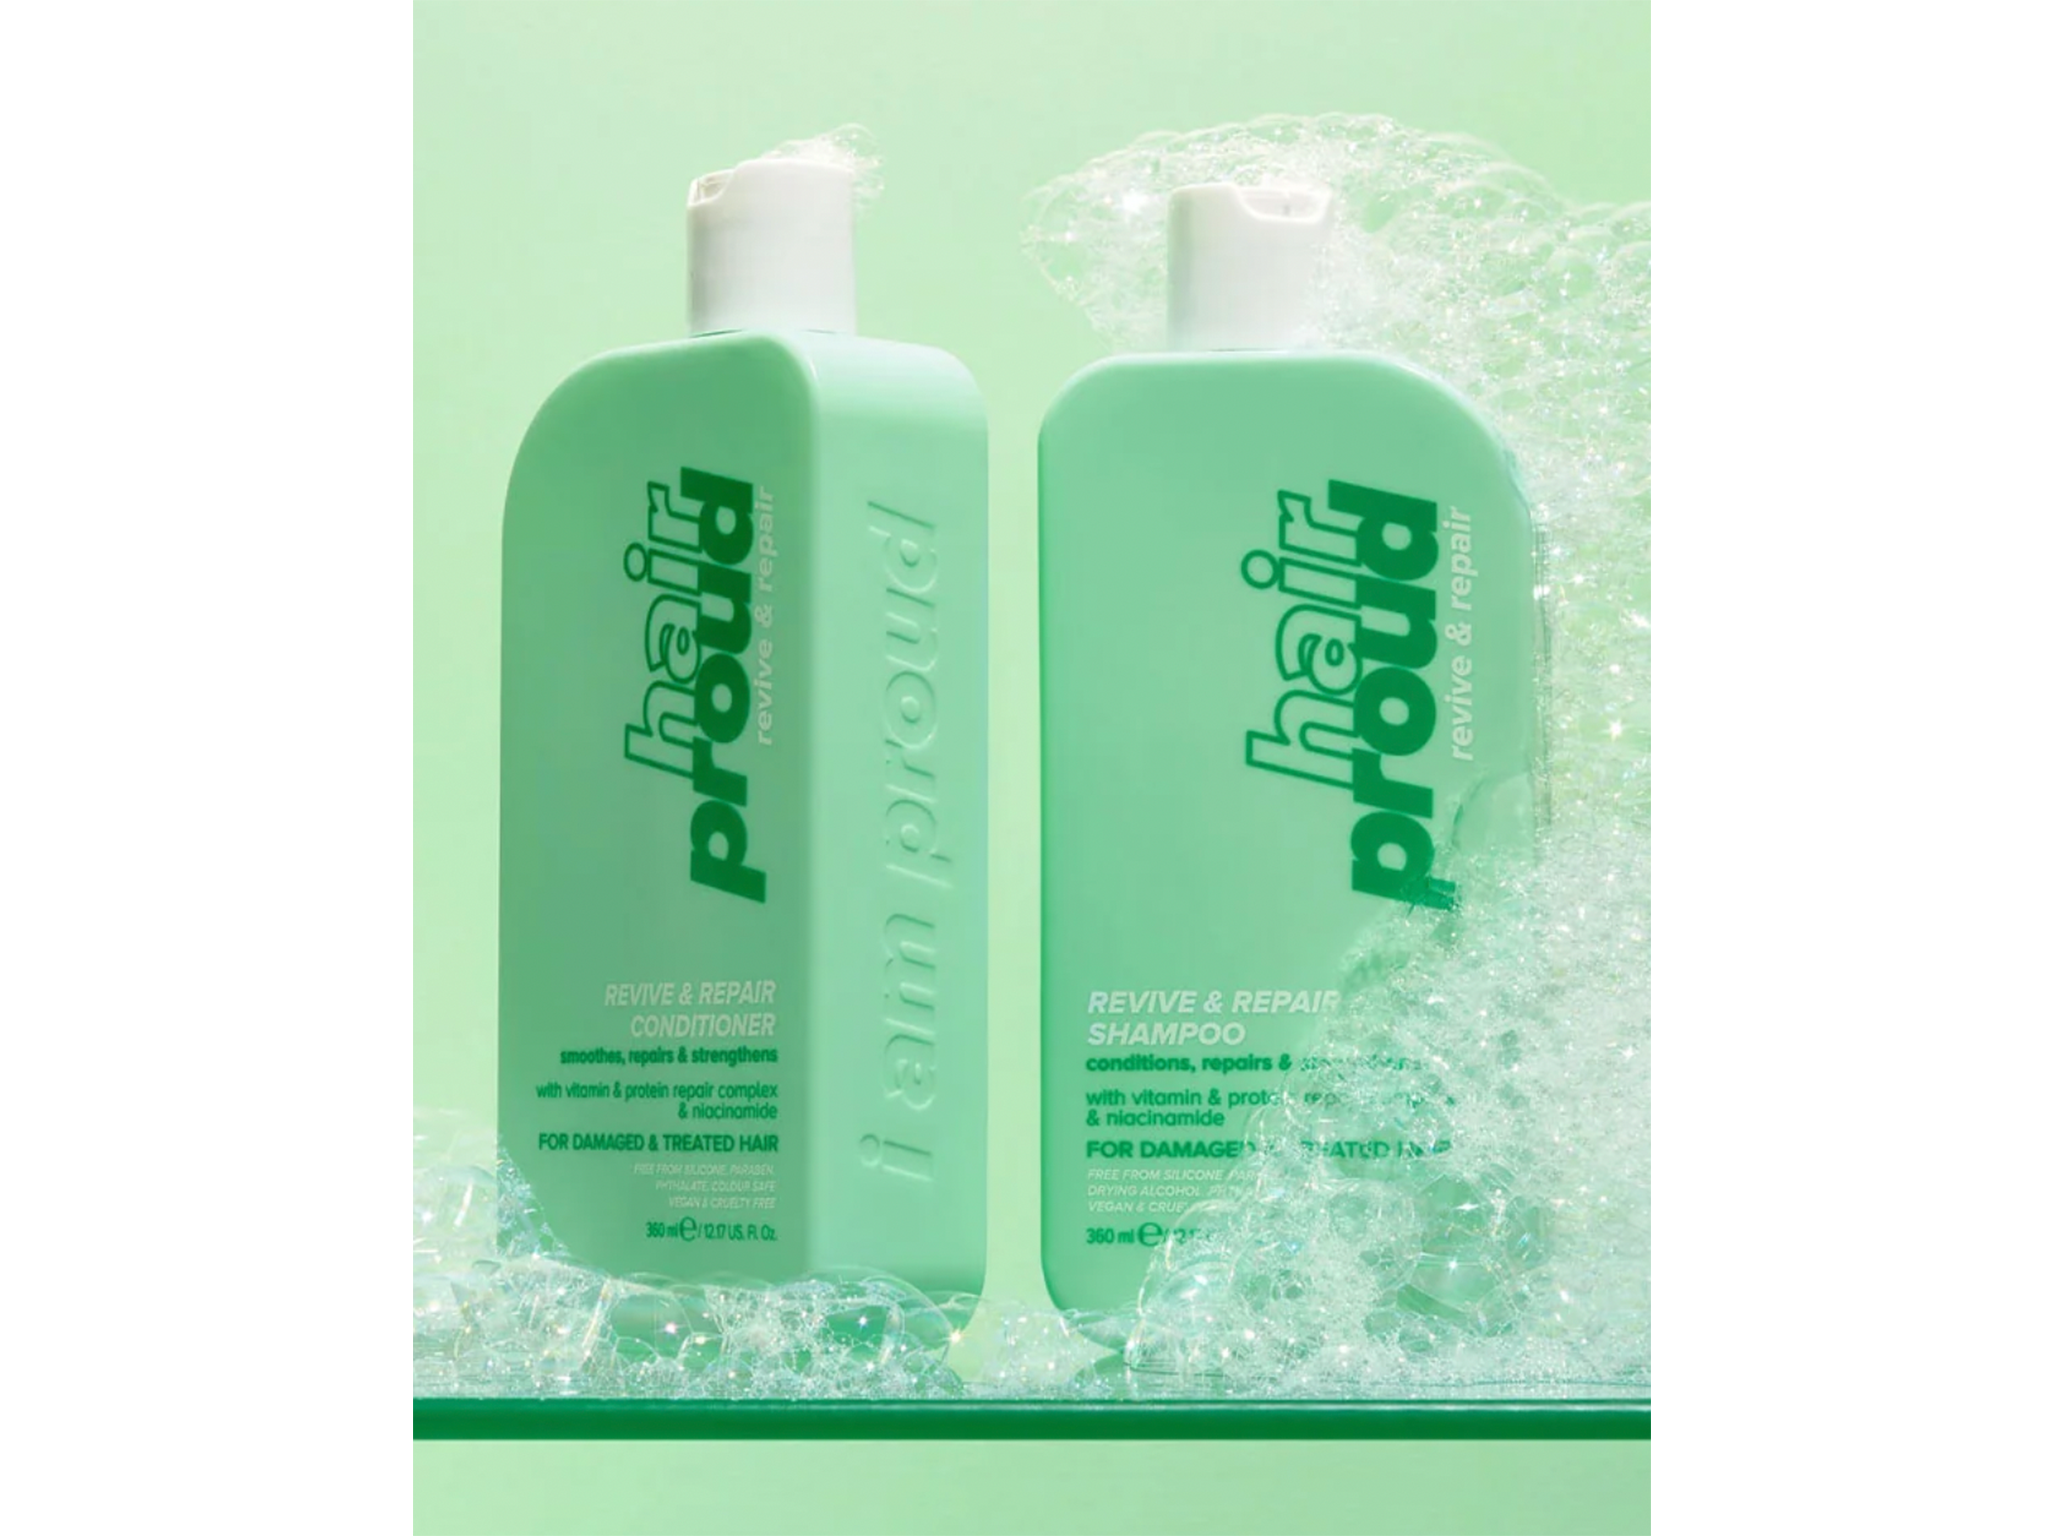 Bargain beauty buys Hair Proud revive & repair shampoo